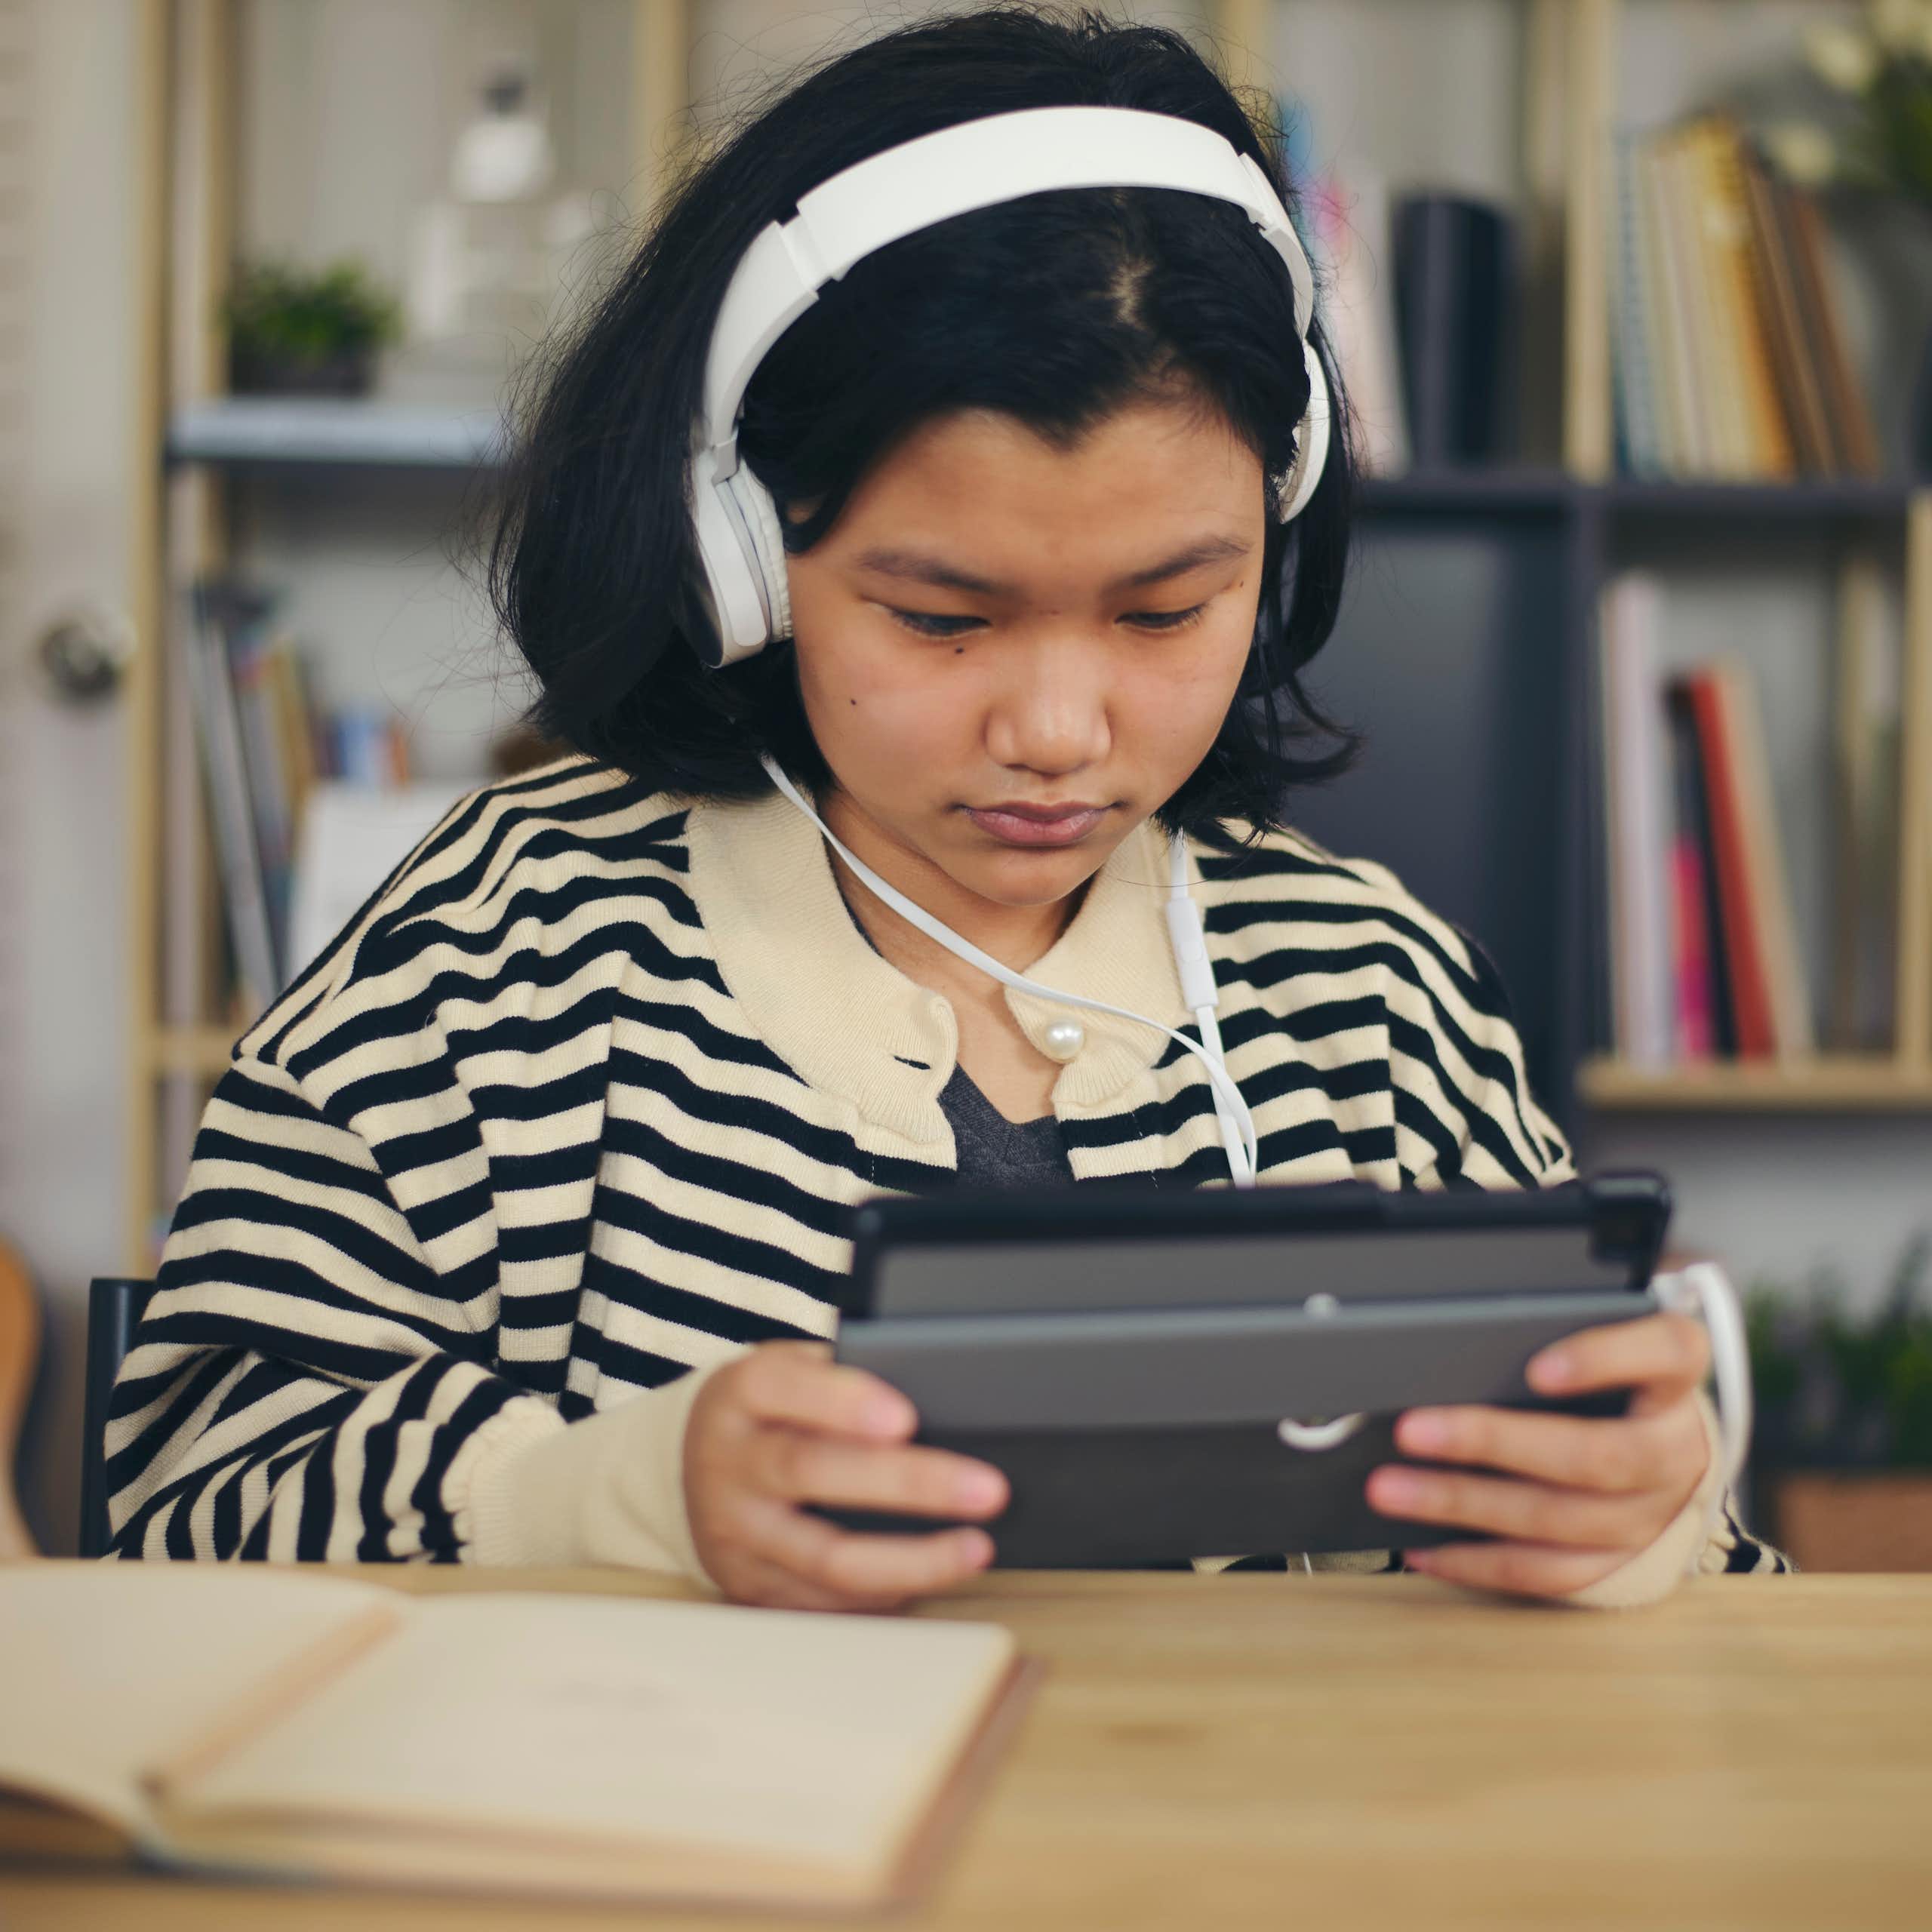 Girl in headphones using tablet